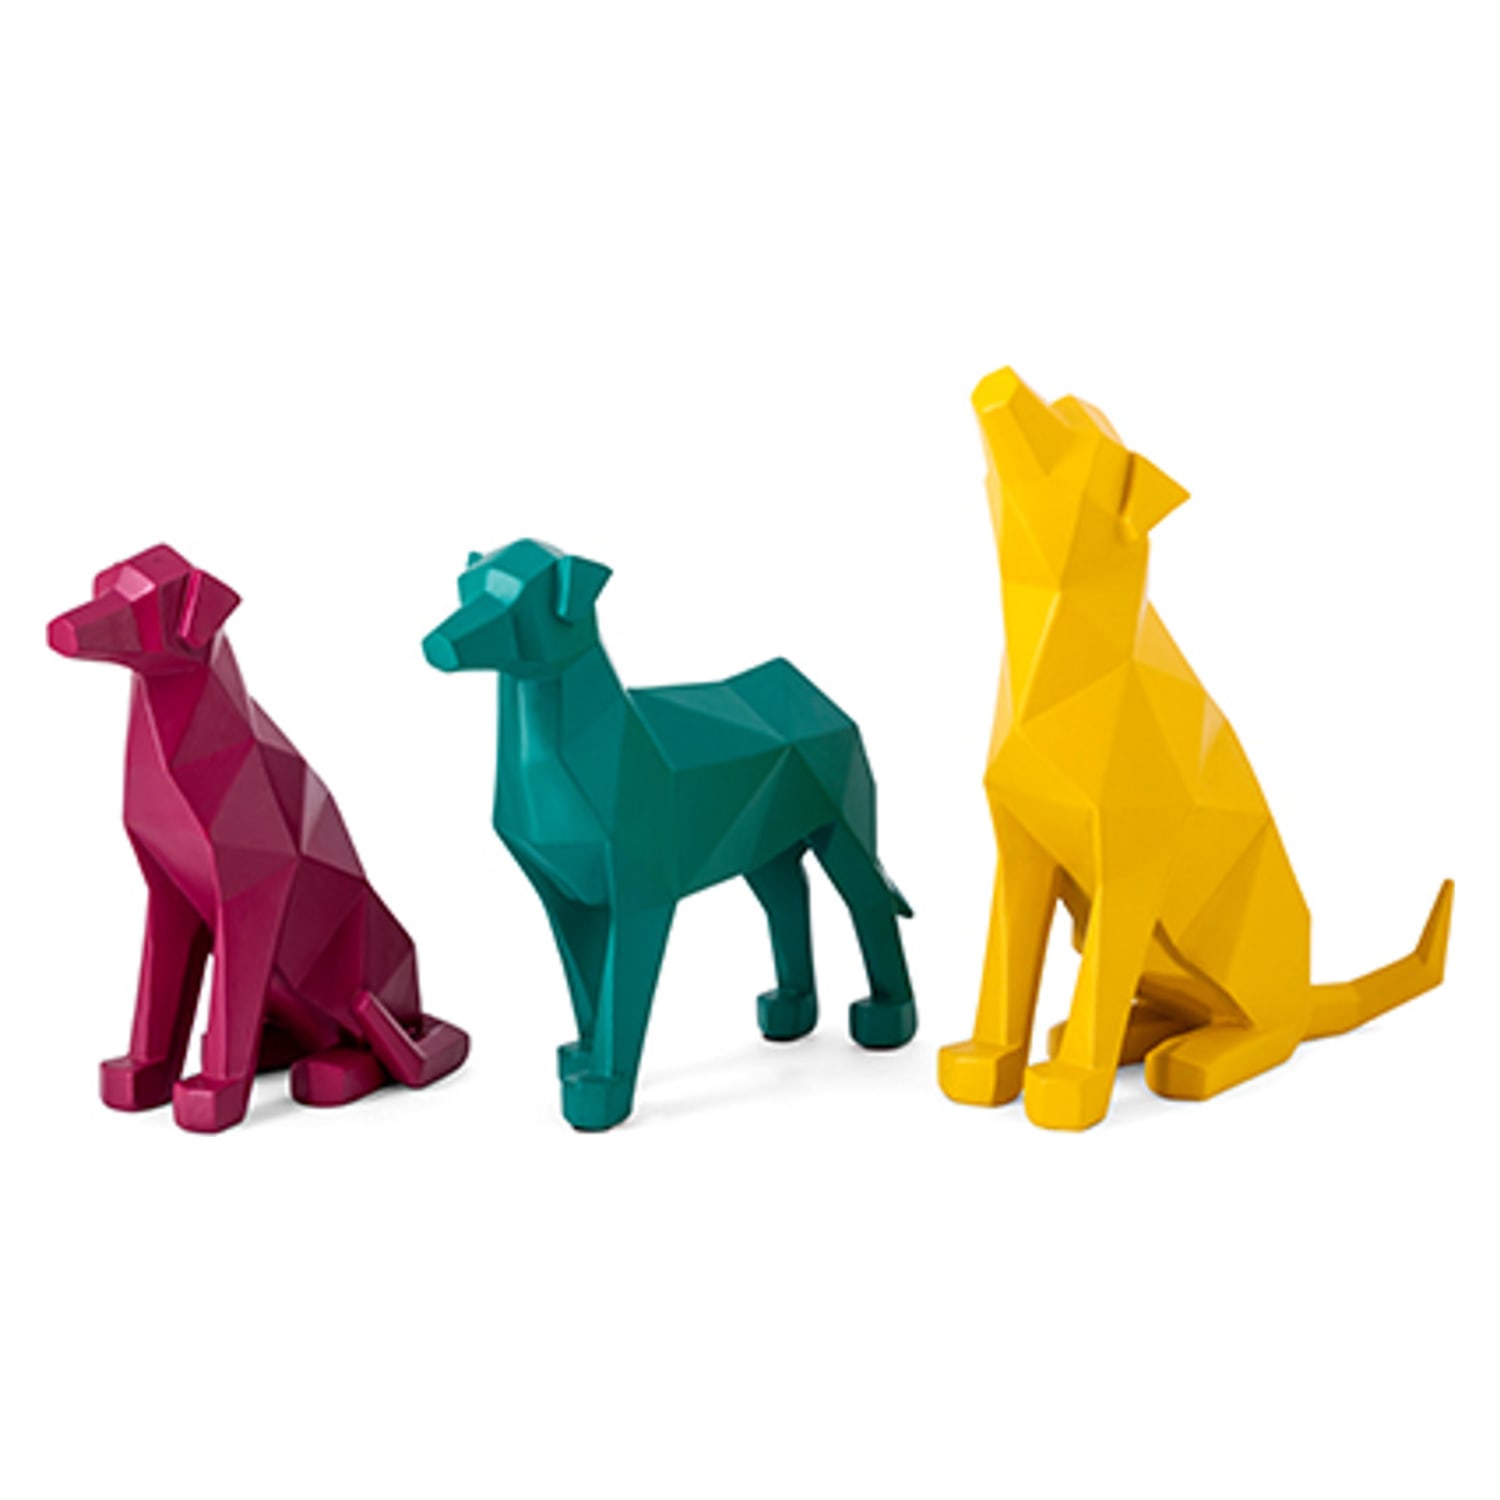 Origami Dog Statuaries - Set of 3